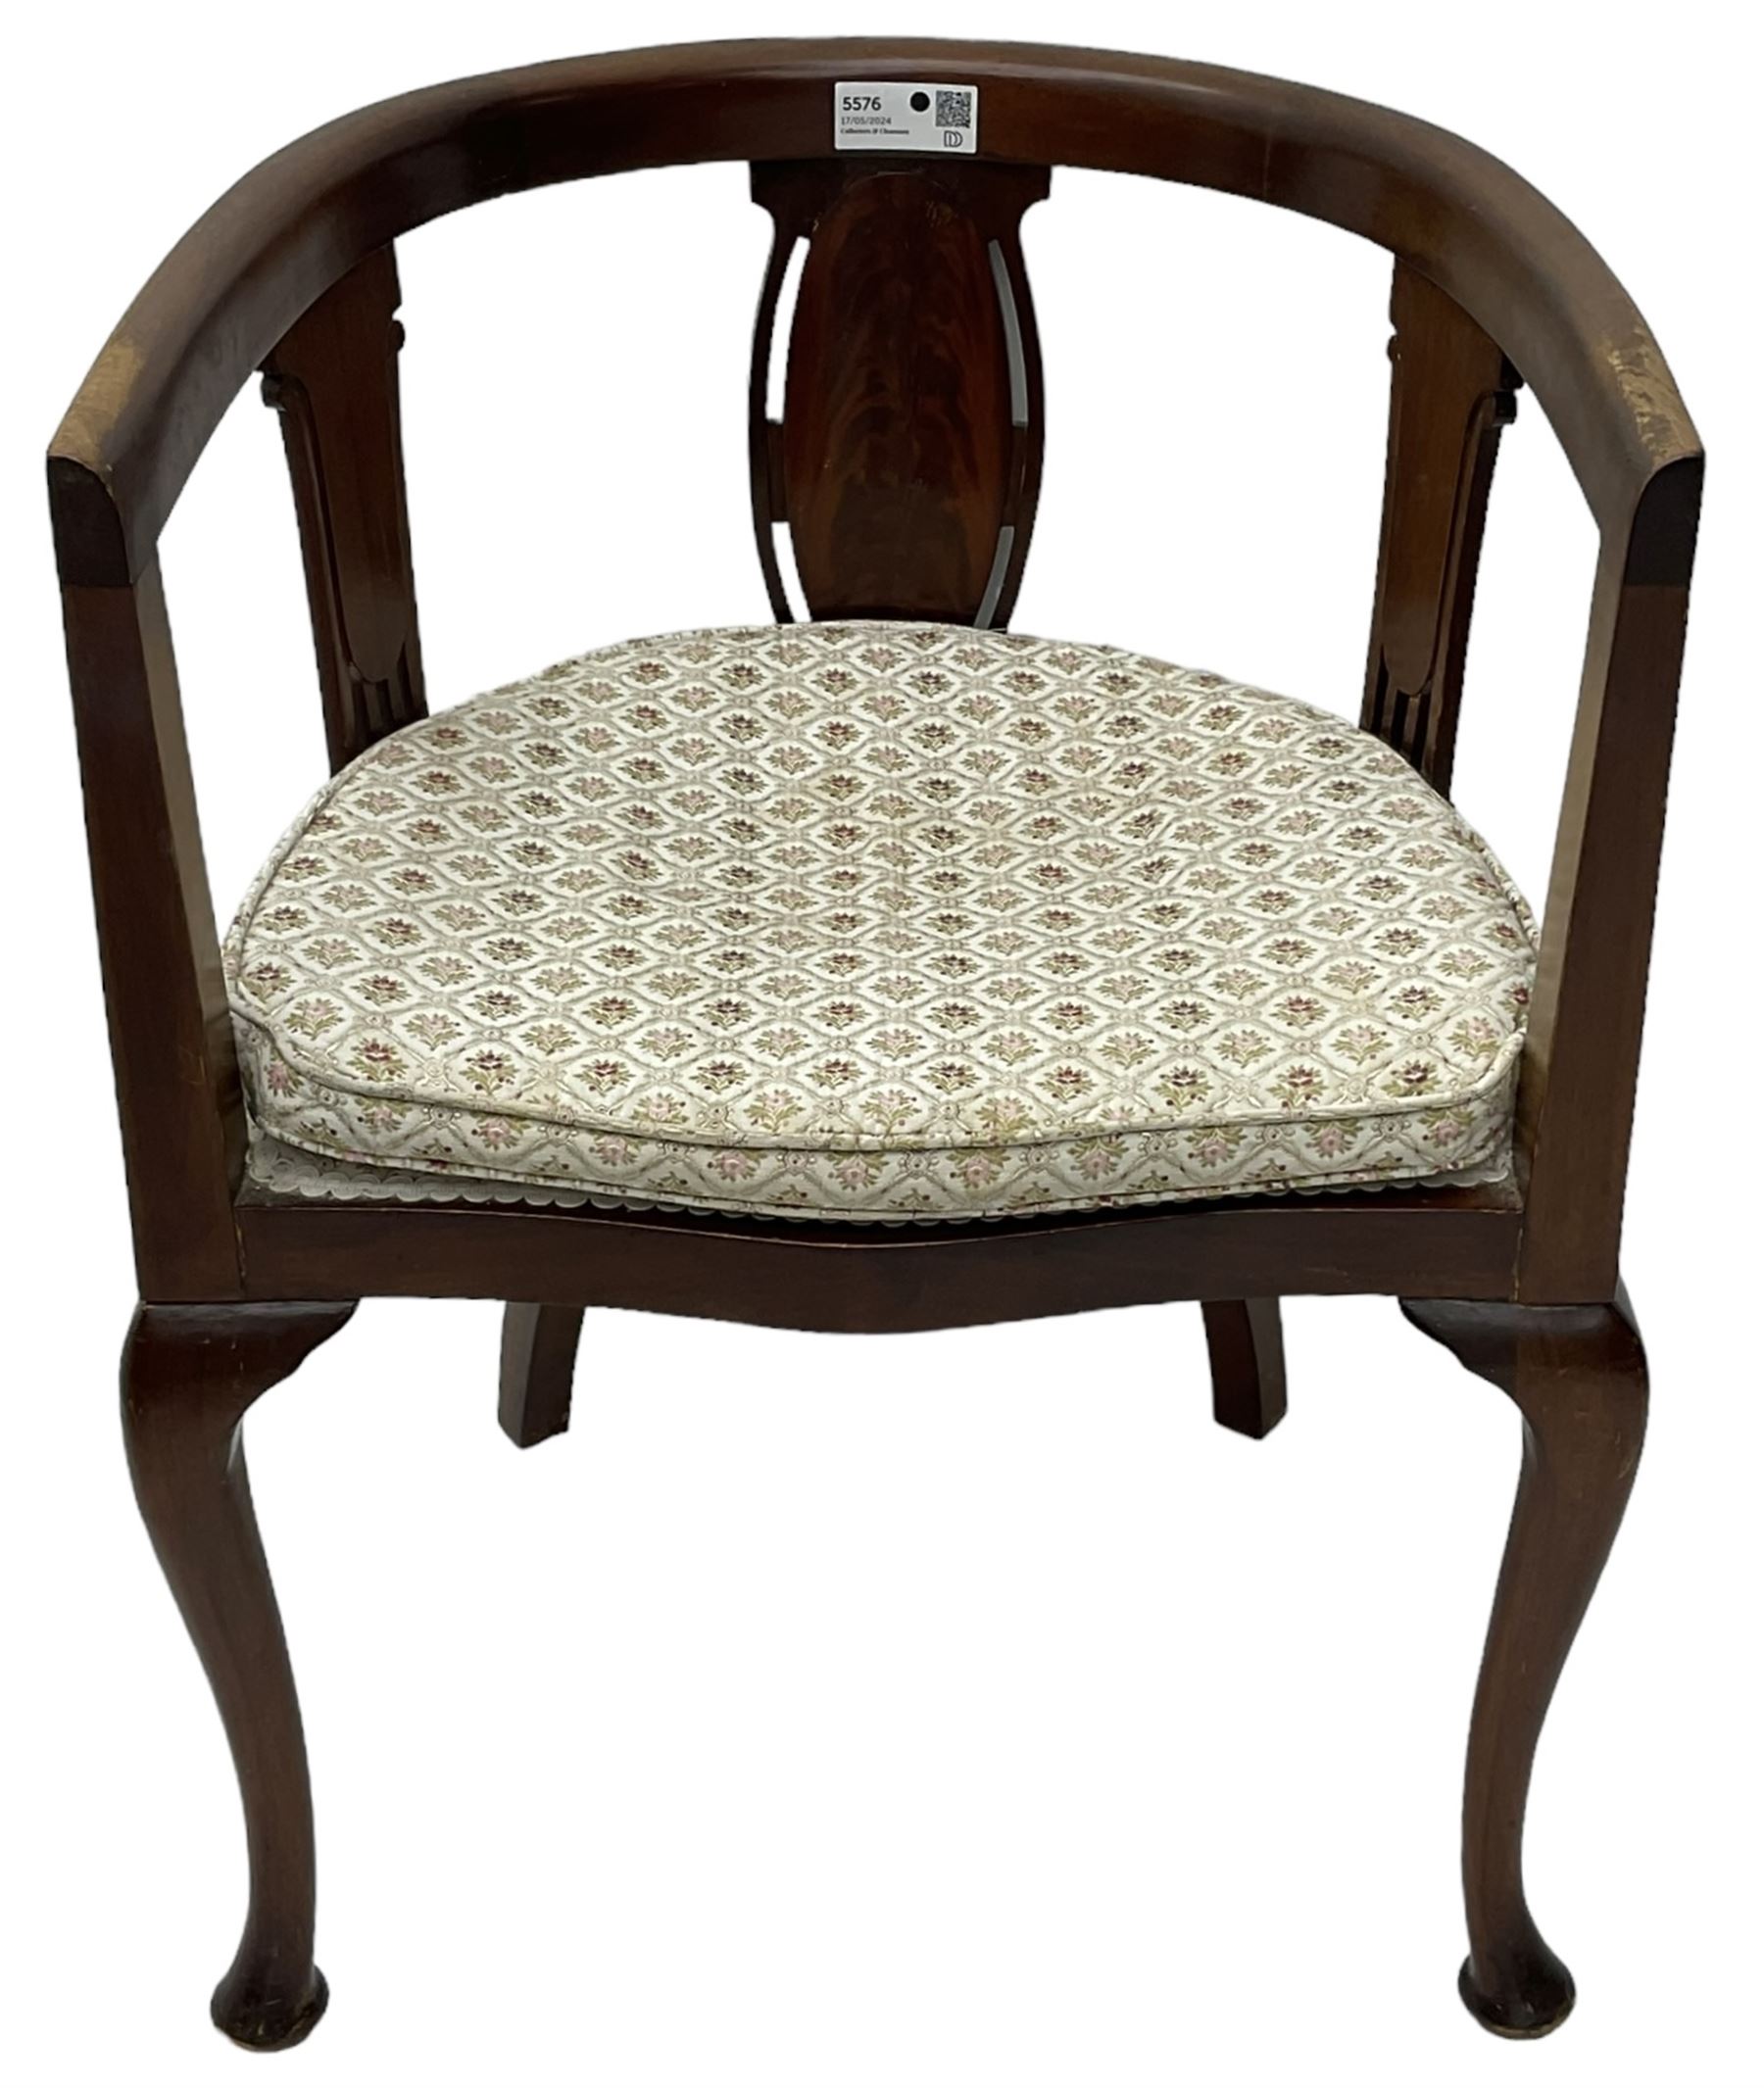 Early 20th century mahogany tub shaped chair - Image 2 of 5